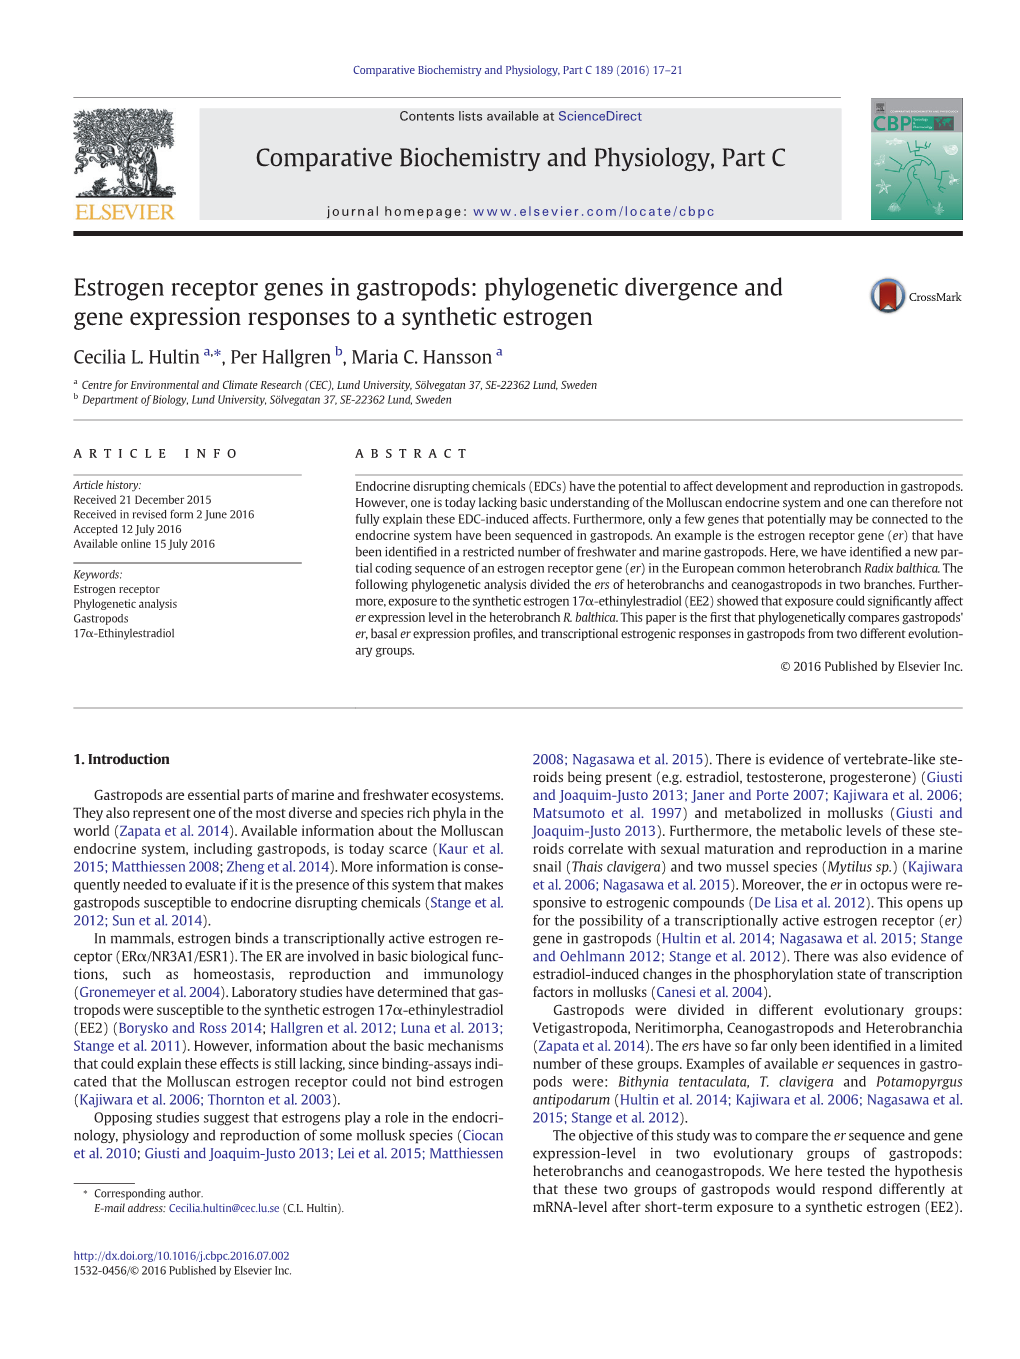 Estrogen Receptor Genes in Gastropods: Phylogenetic Divergence and Gene Expression Responses to a Synthetic Estrogen